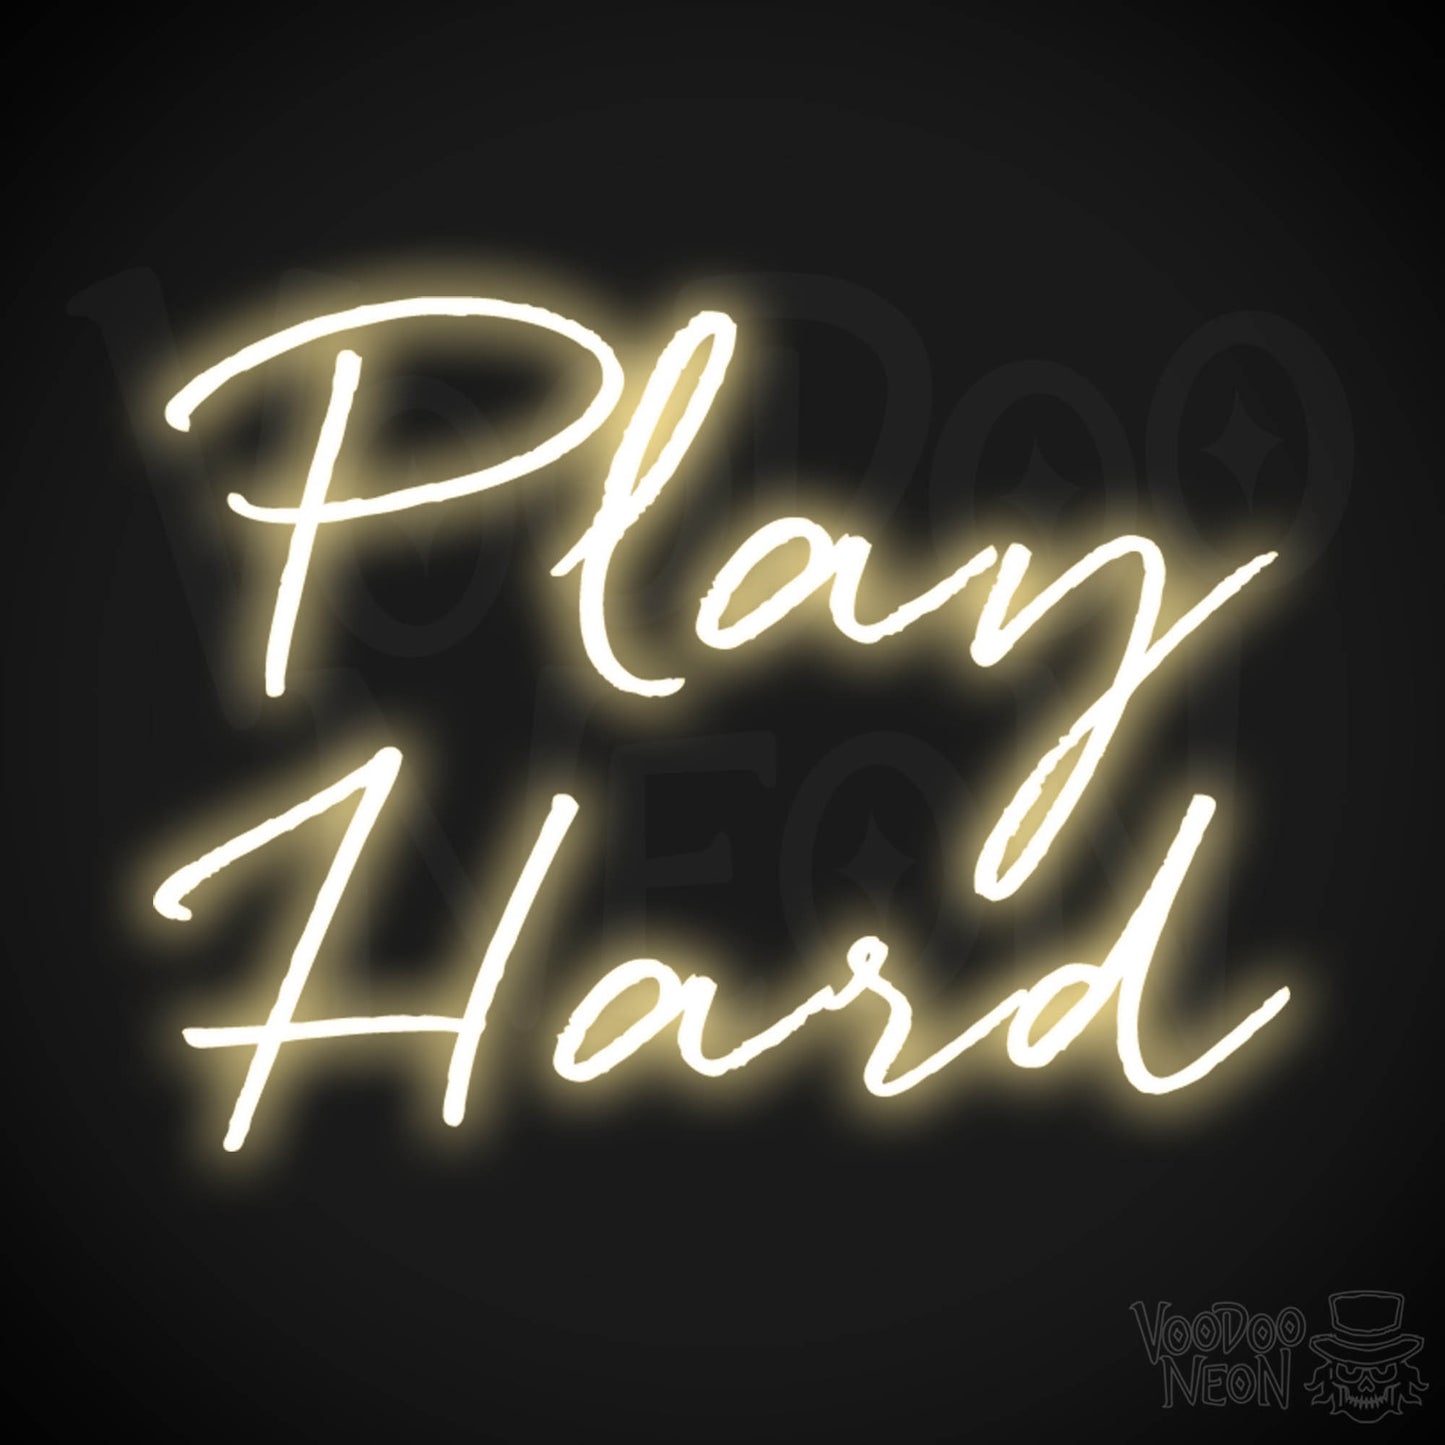 Play Hard Neon Sign - Neon Play Hard Sign - Play Hard LED Sign - Color Warm White